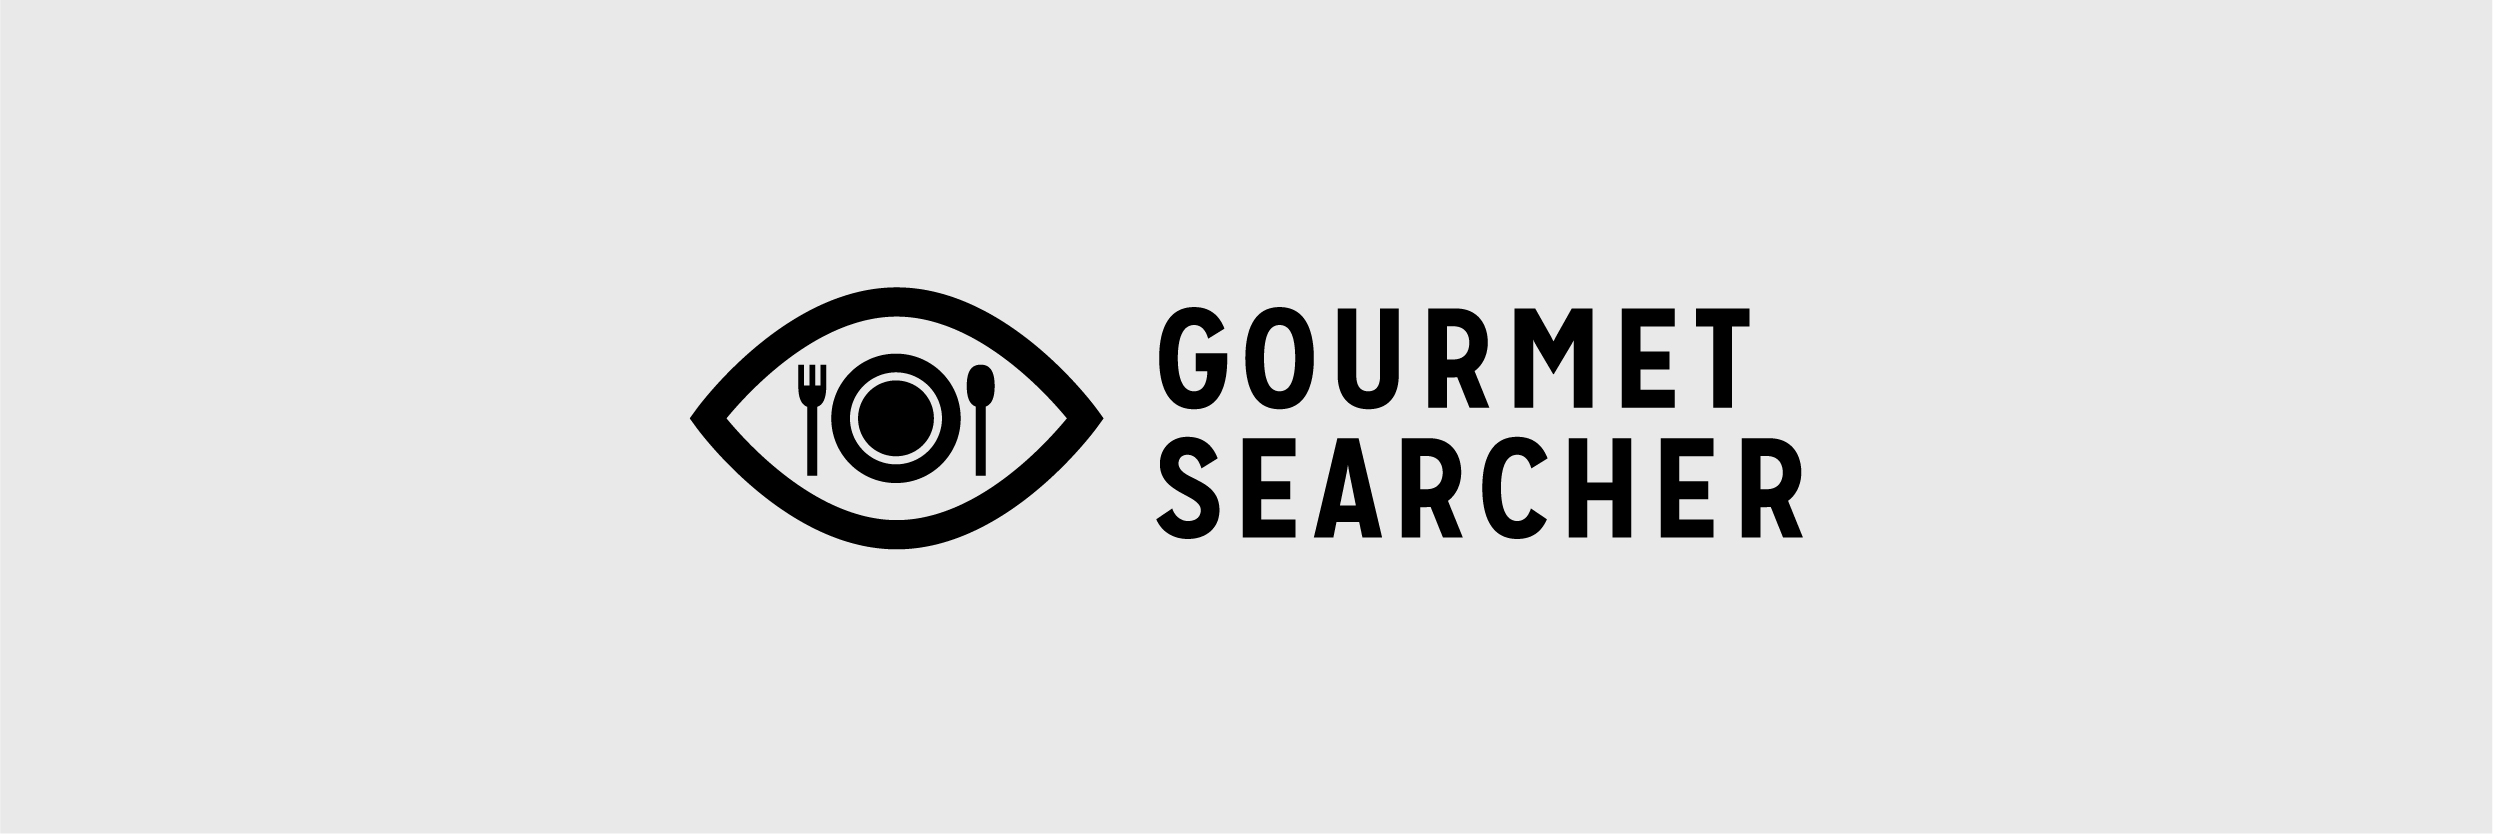 gourmet-searcher